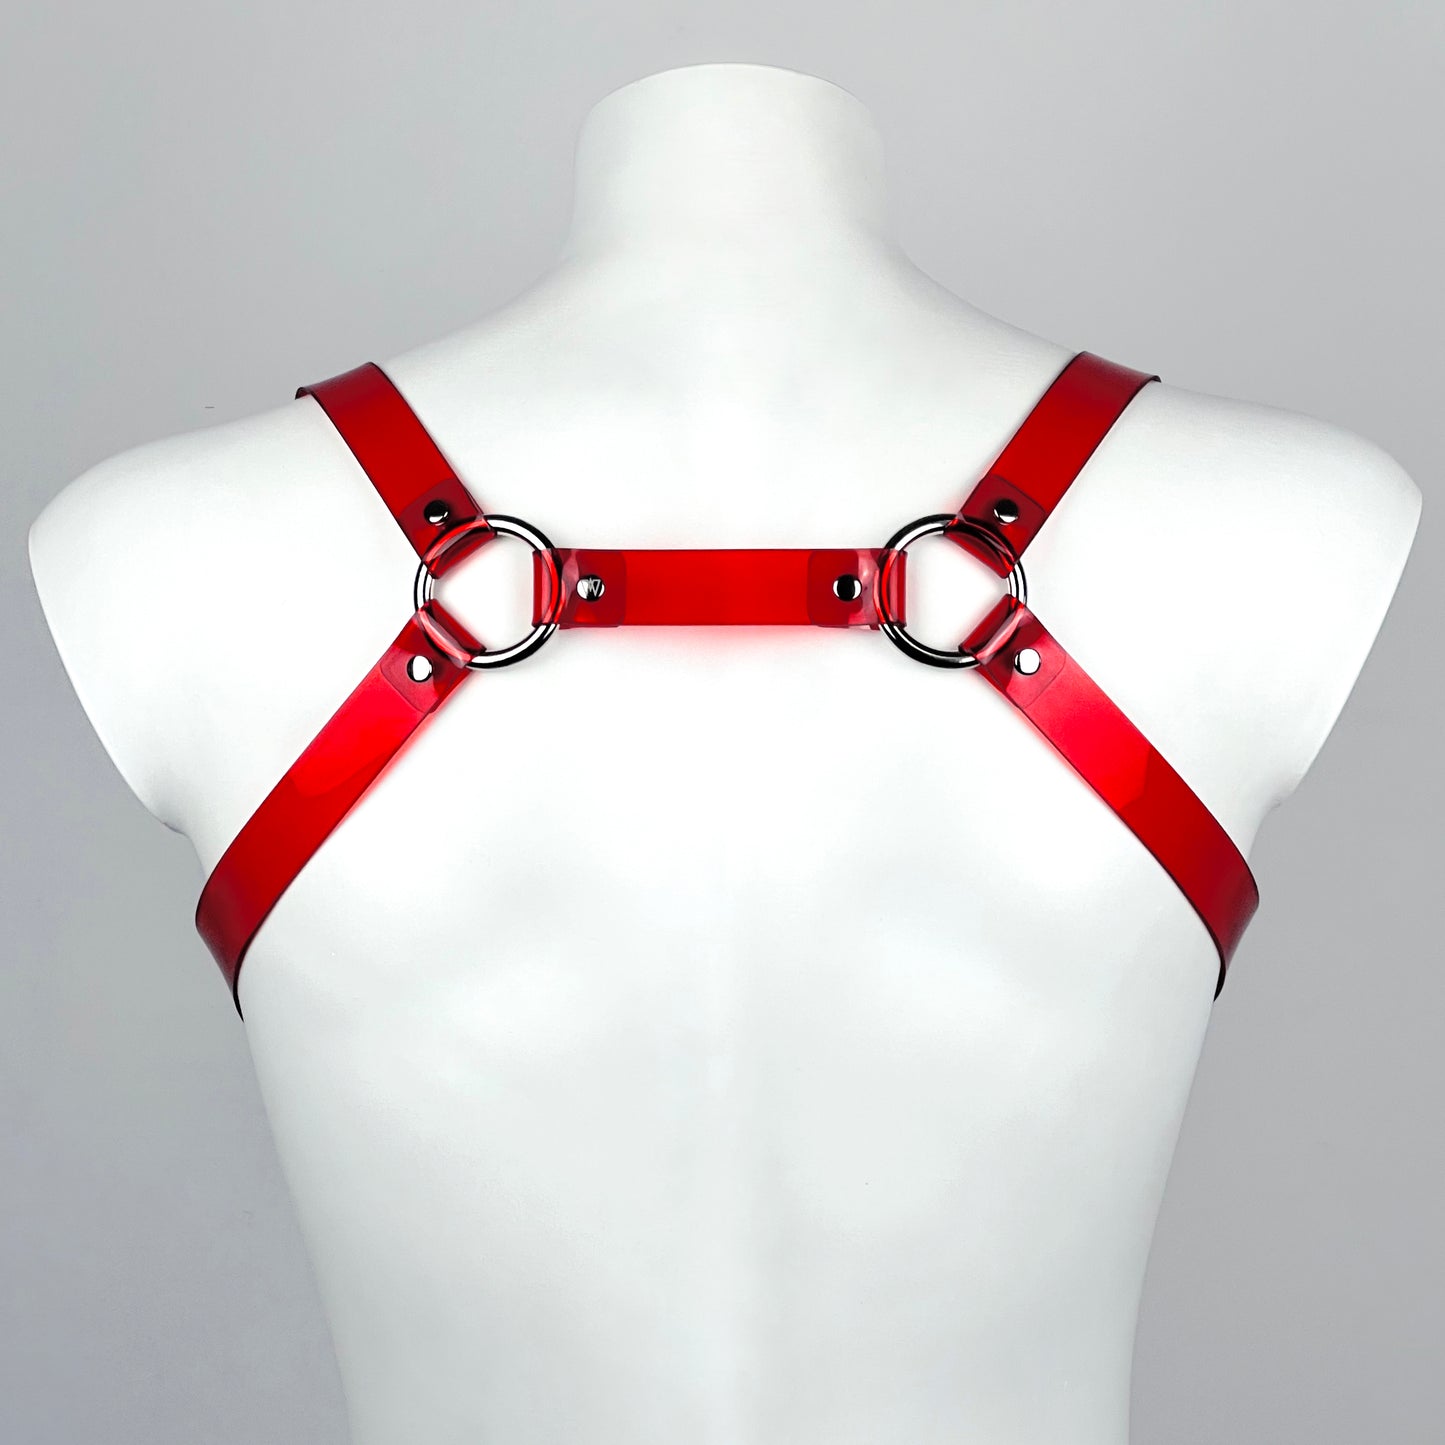 Vers shoulder harness